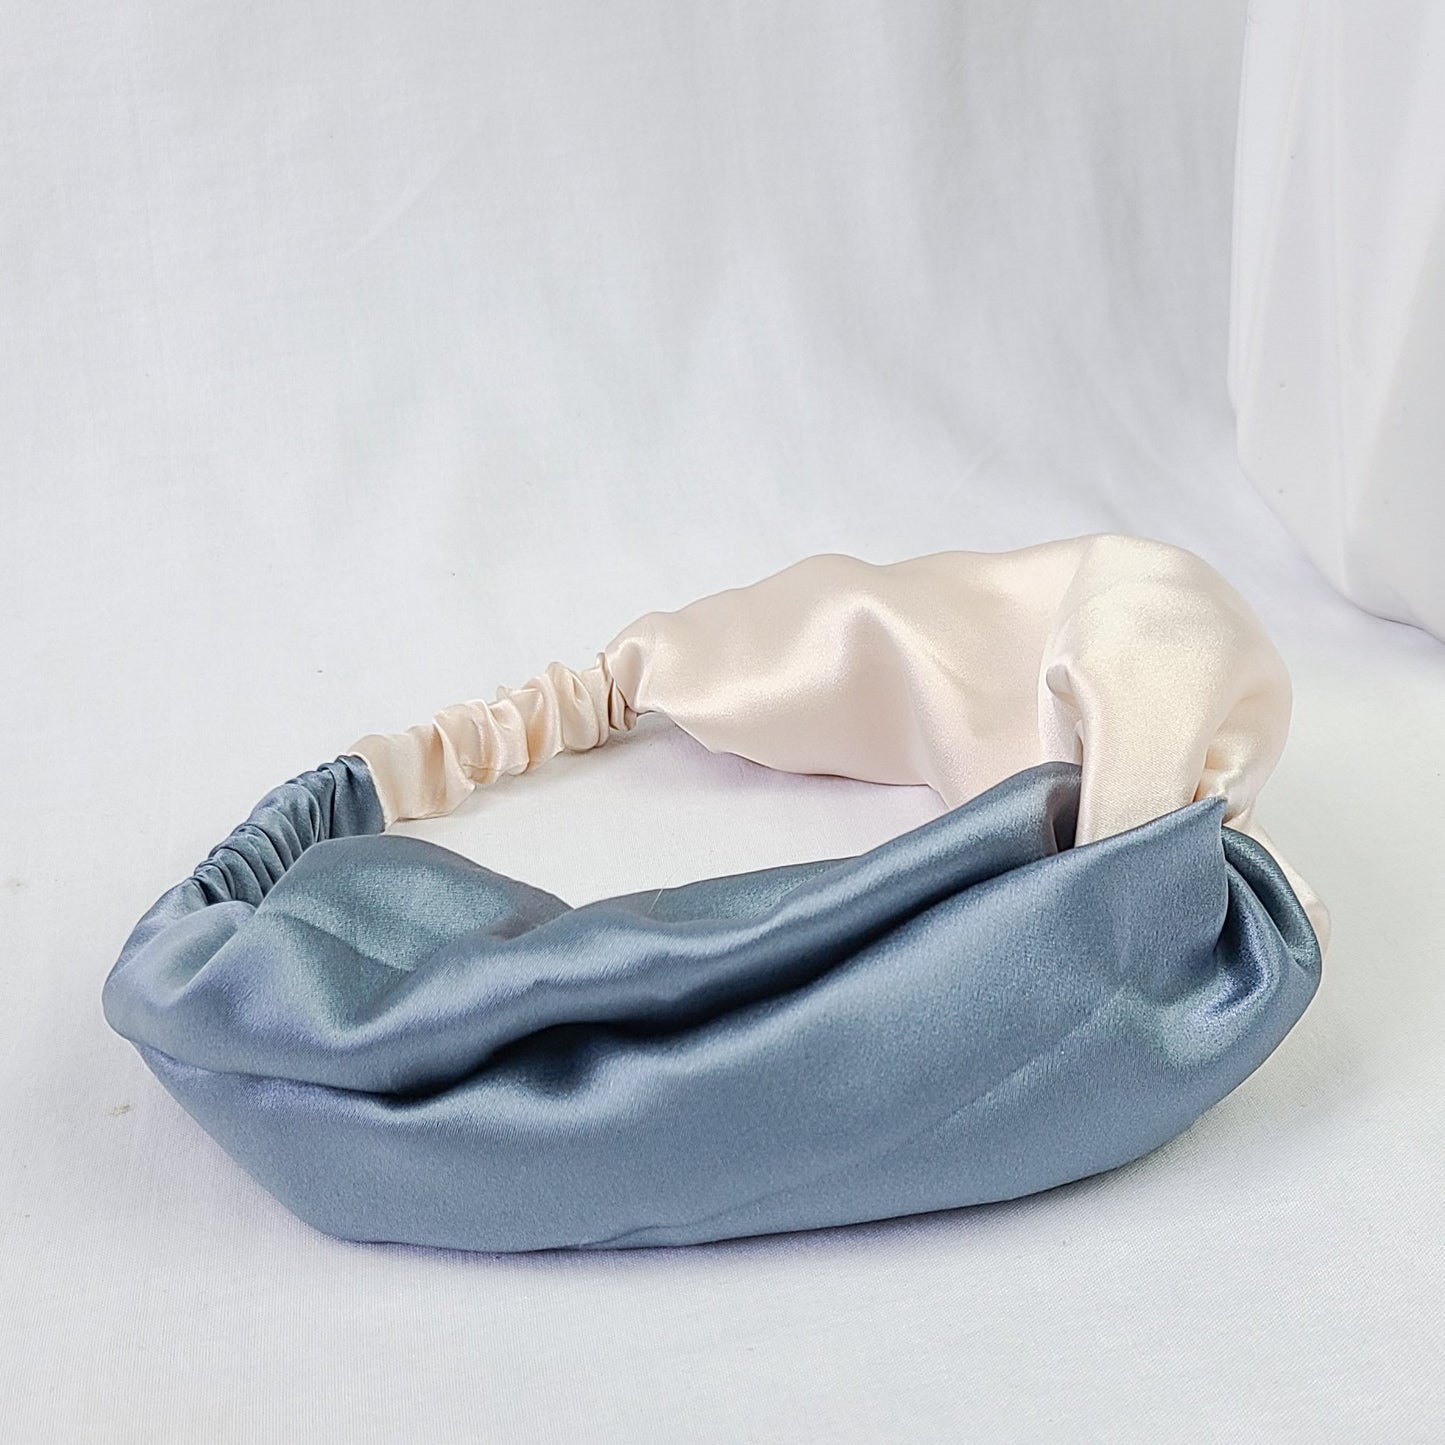 Silk knot headband - 2 tone - ivory and Blue -R Belliard